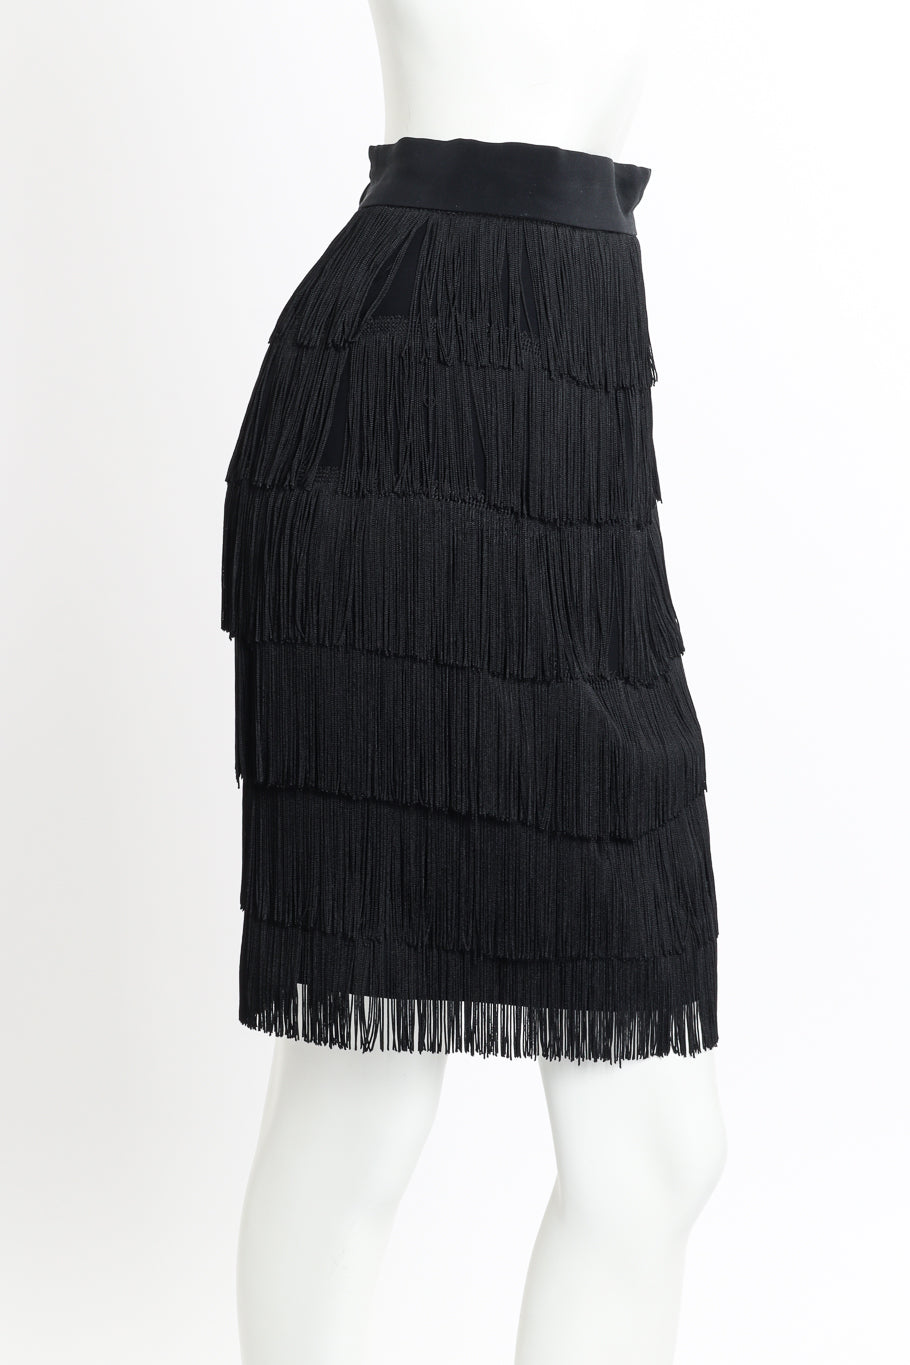 Vintage Moschino Couture Fringe Jacket and Skirt Set skirt side on mannequin @recessla